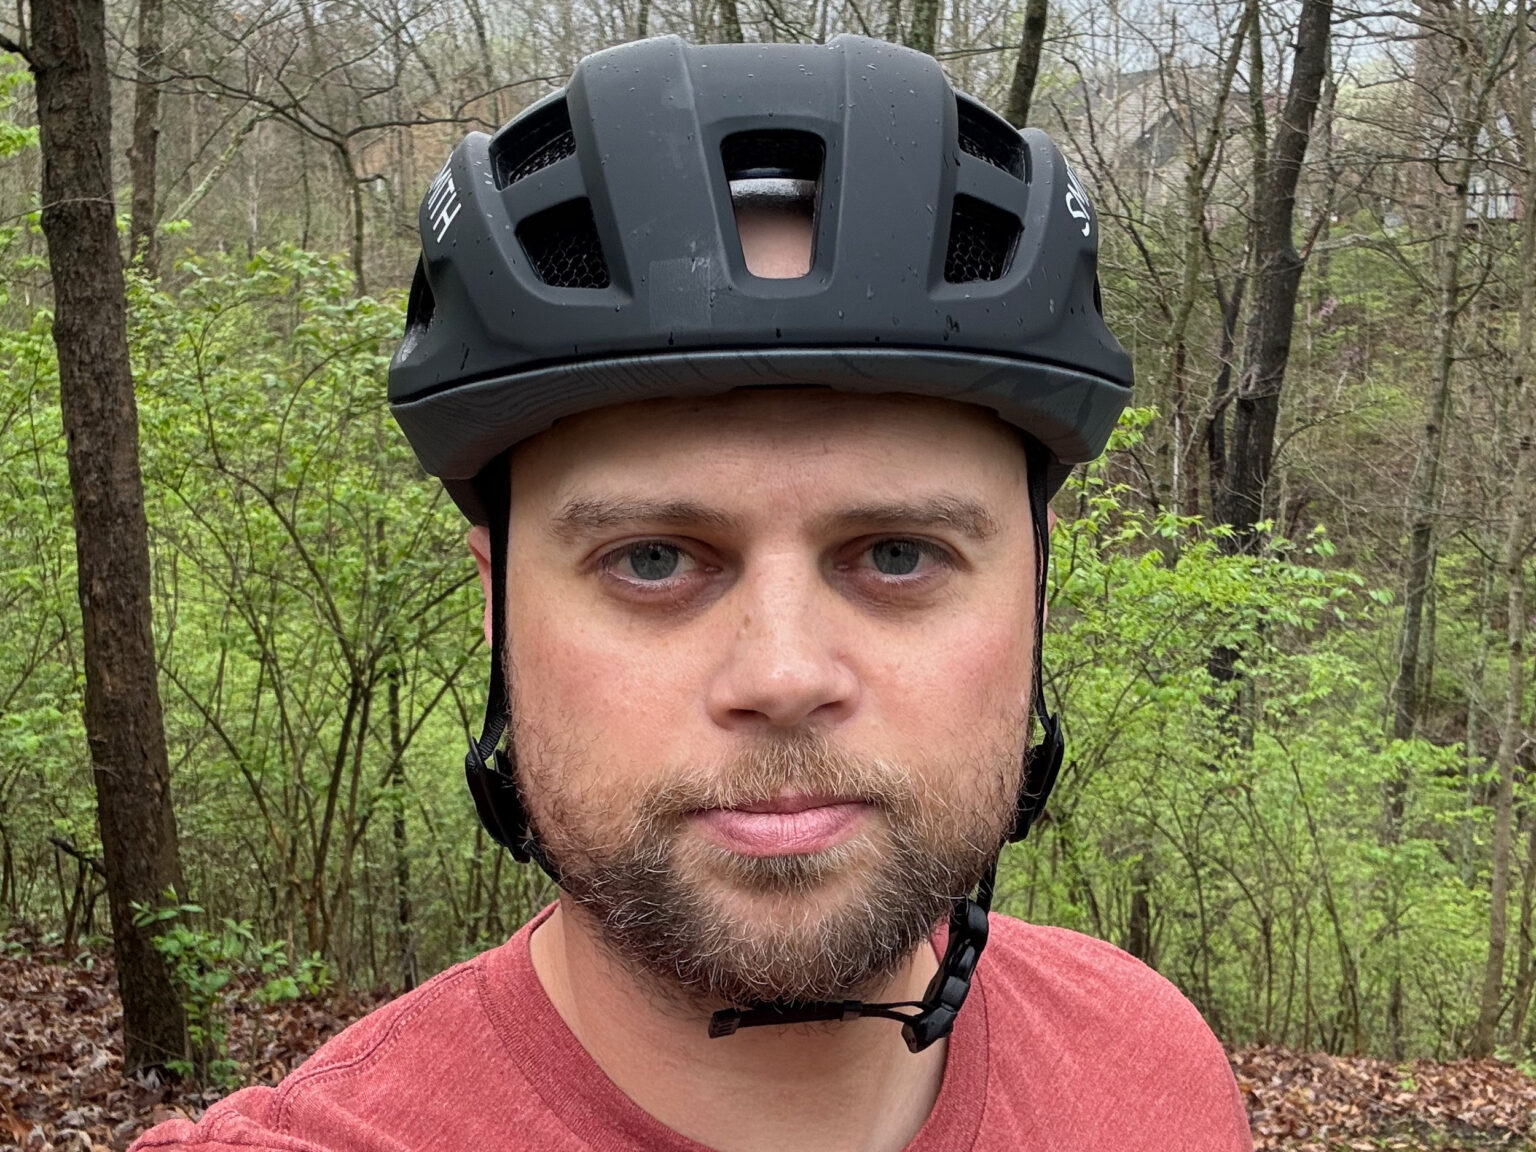 wearing Smith Triad road gravel helmet with Aleck crash sensor